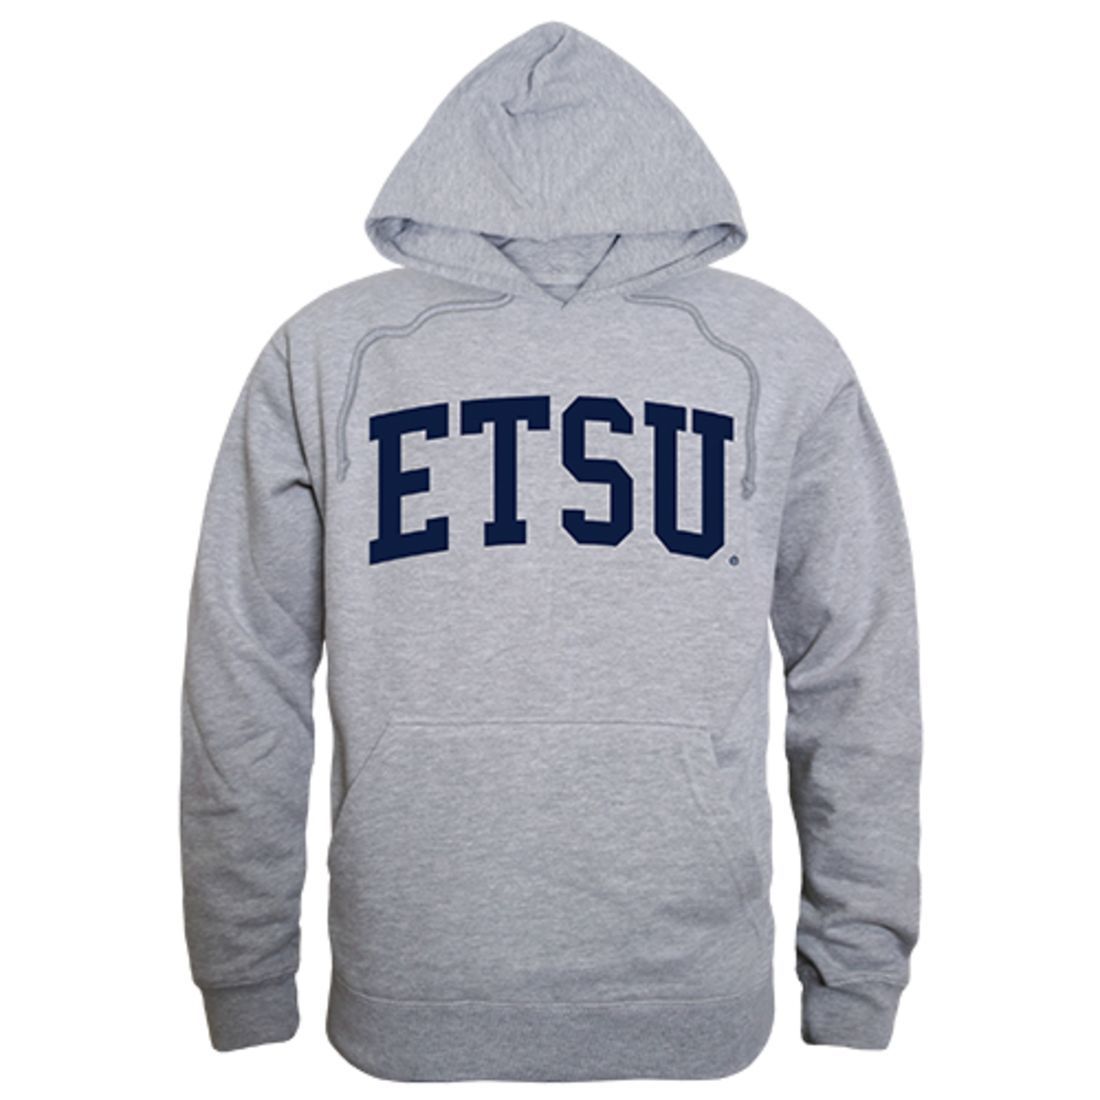 ETSU East Tennessee State University Game Day Hoodie Sweatshirt Heather Grey-Campus-Wardrobe